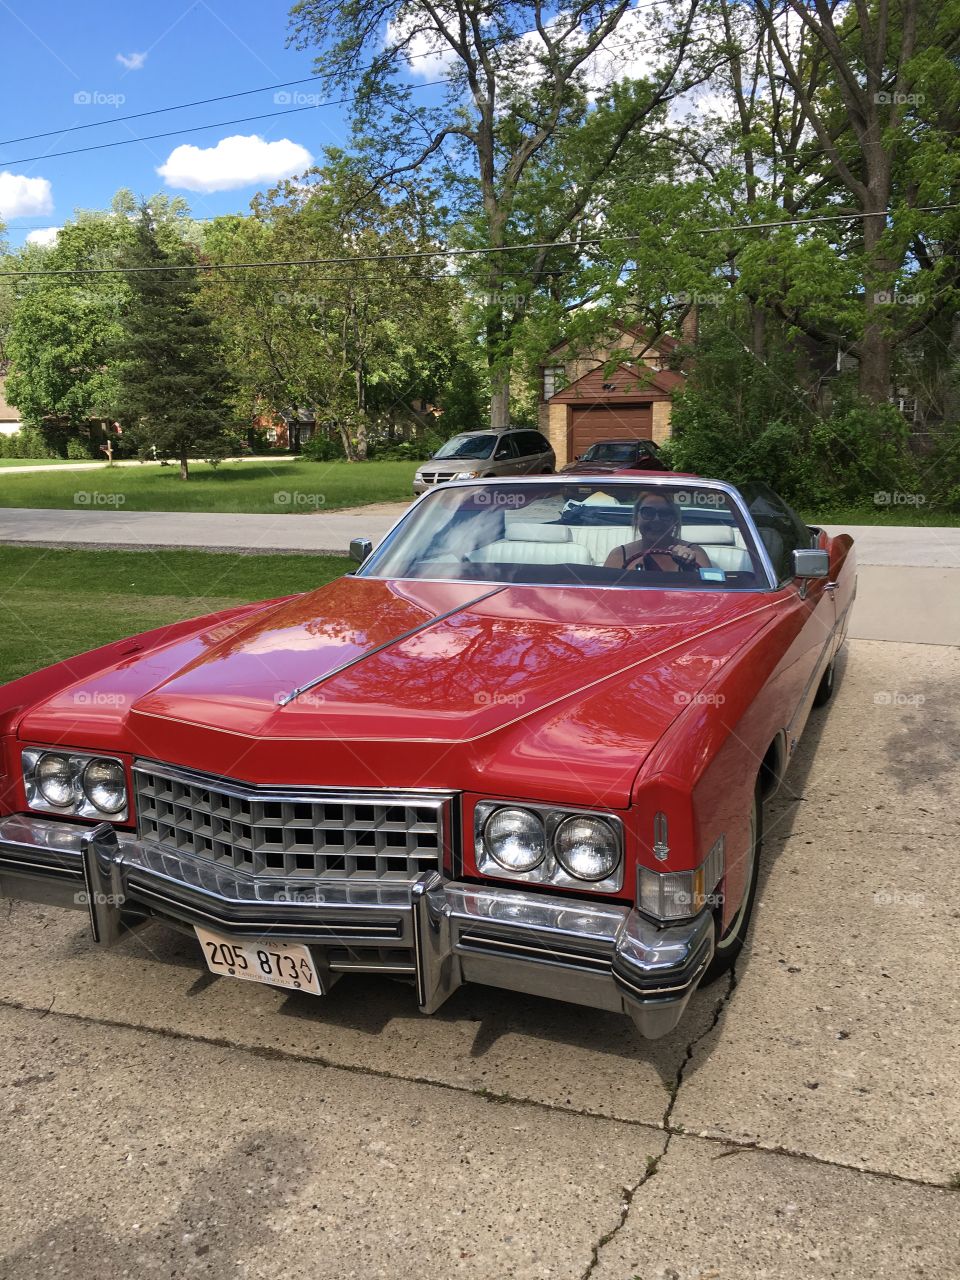 Red Cadillac 